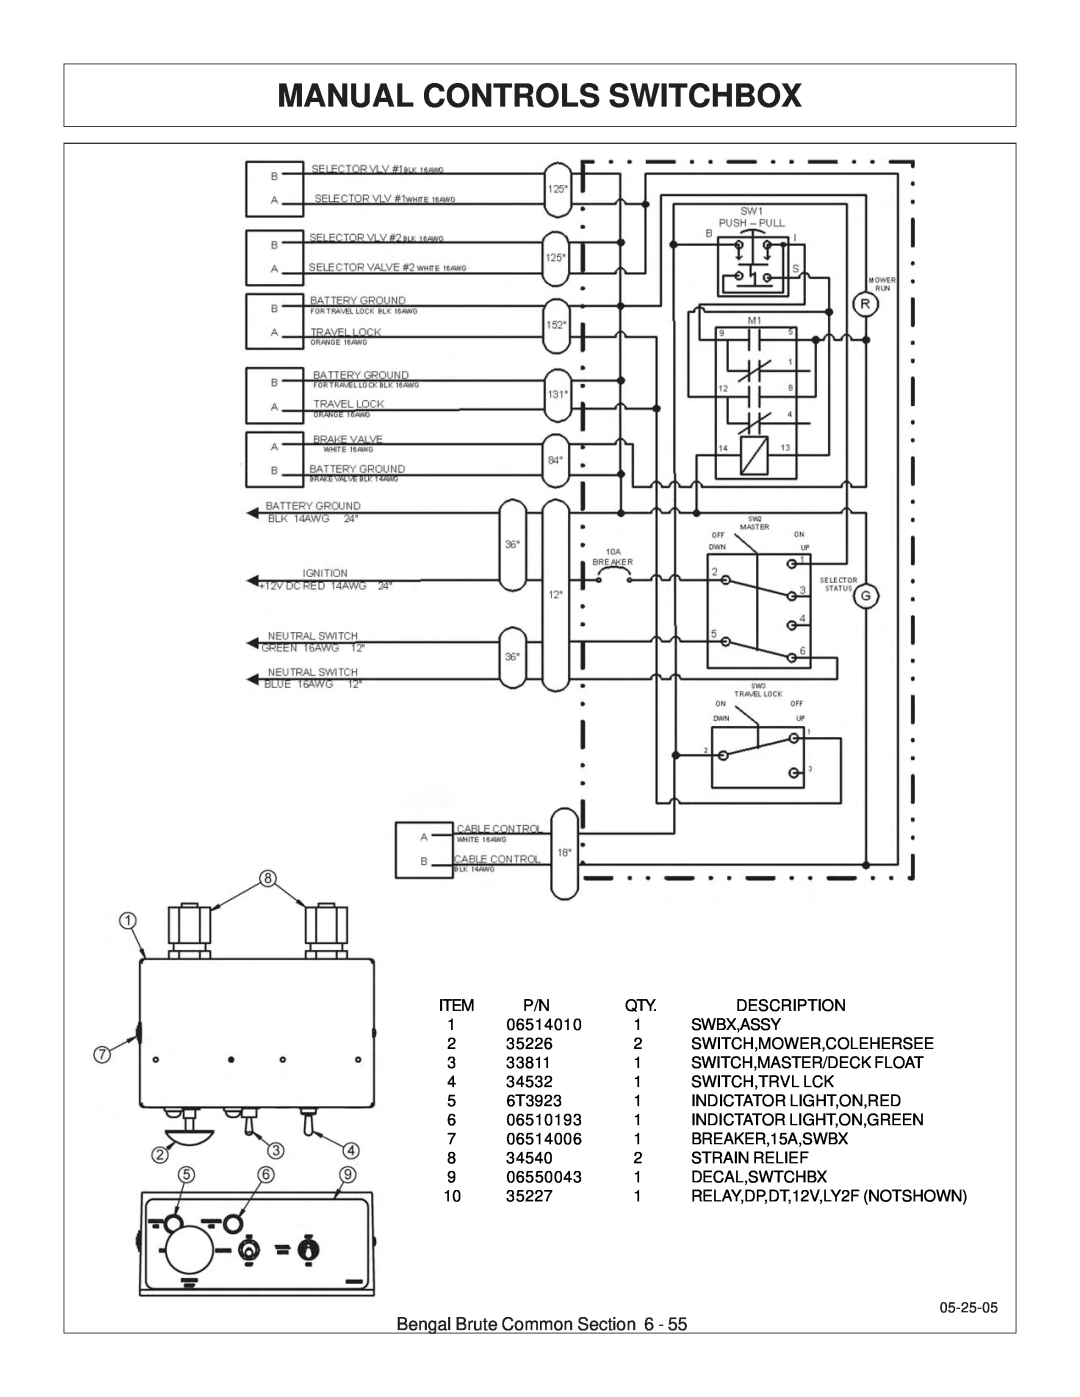 Tiger JD 62-6420 manual Manual Controls Switchbox 